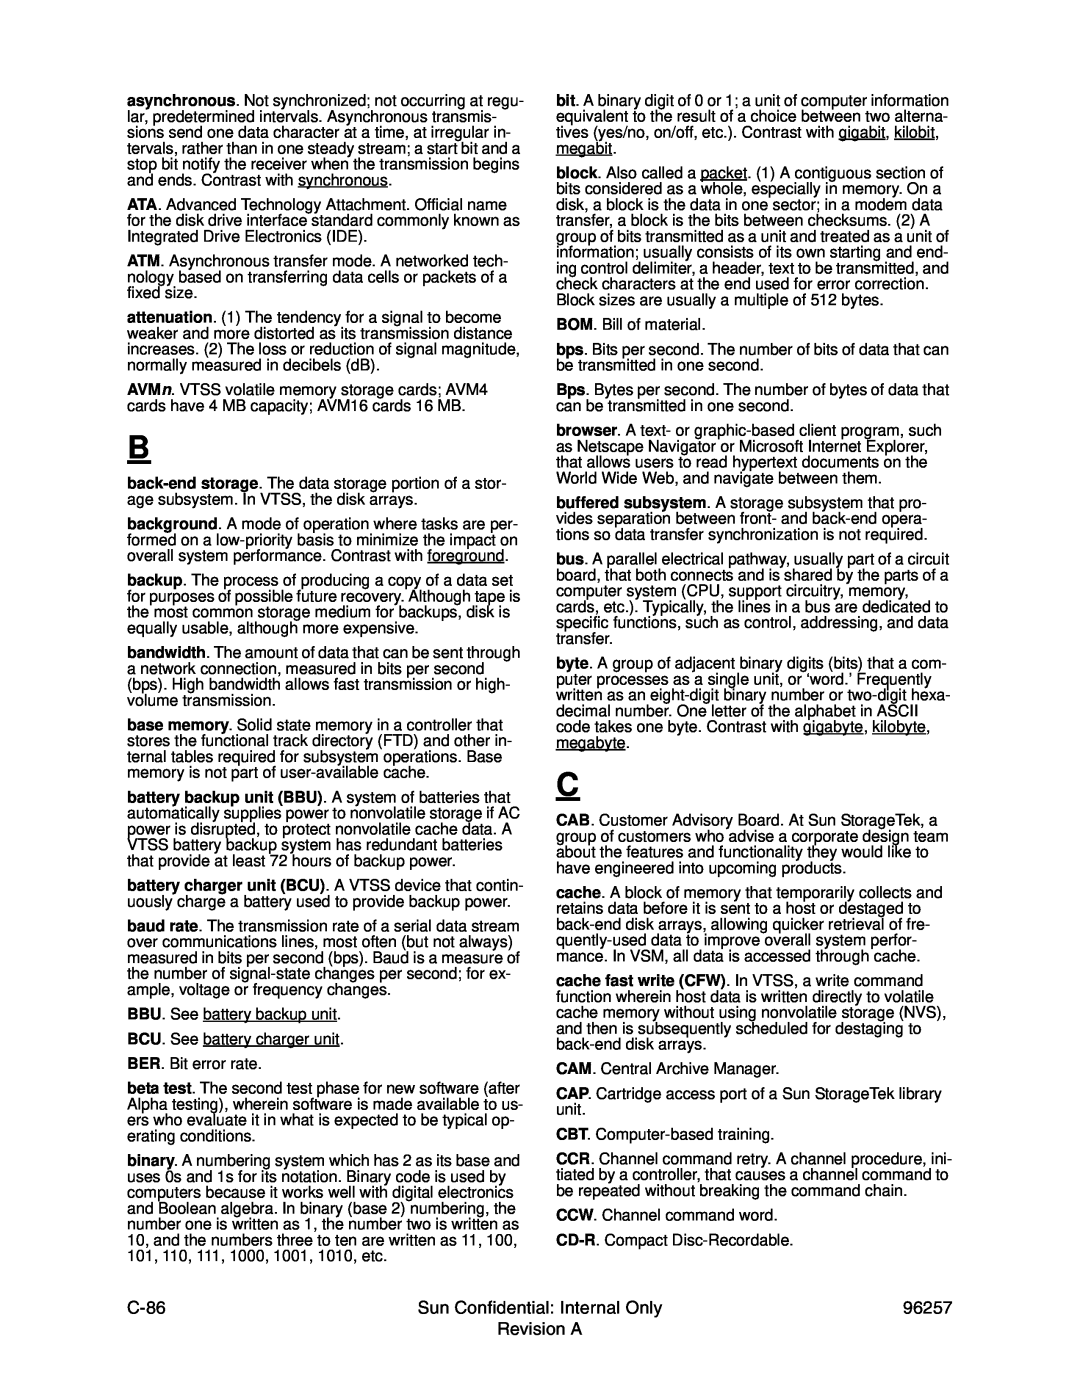 Sun Microsystems 96257 manual C-86, Sun Confidential Internal Only, Revision A 